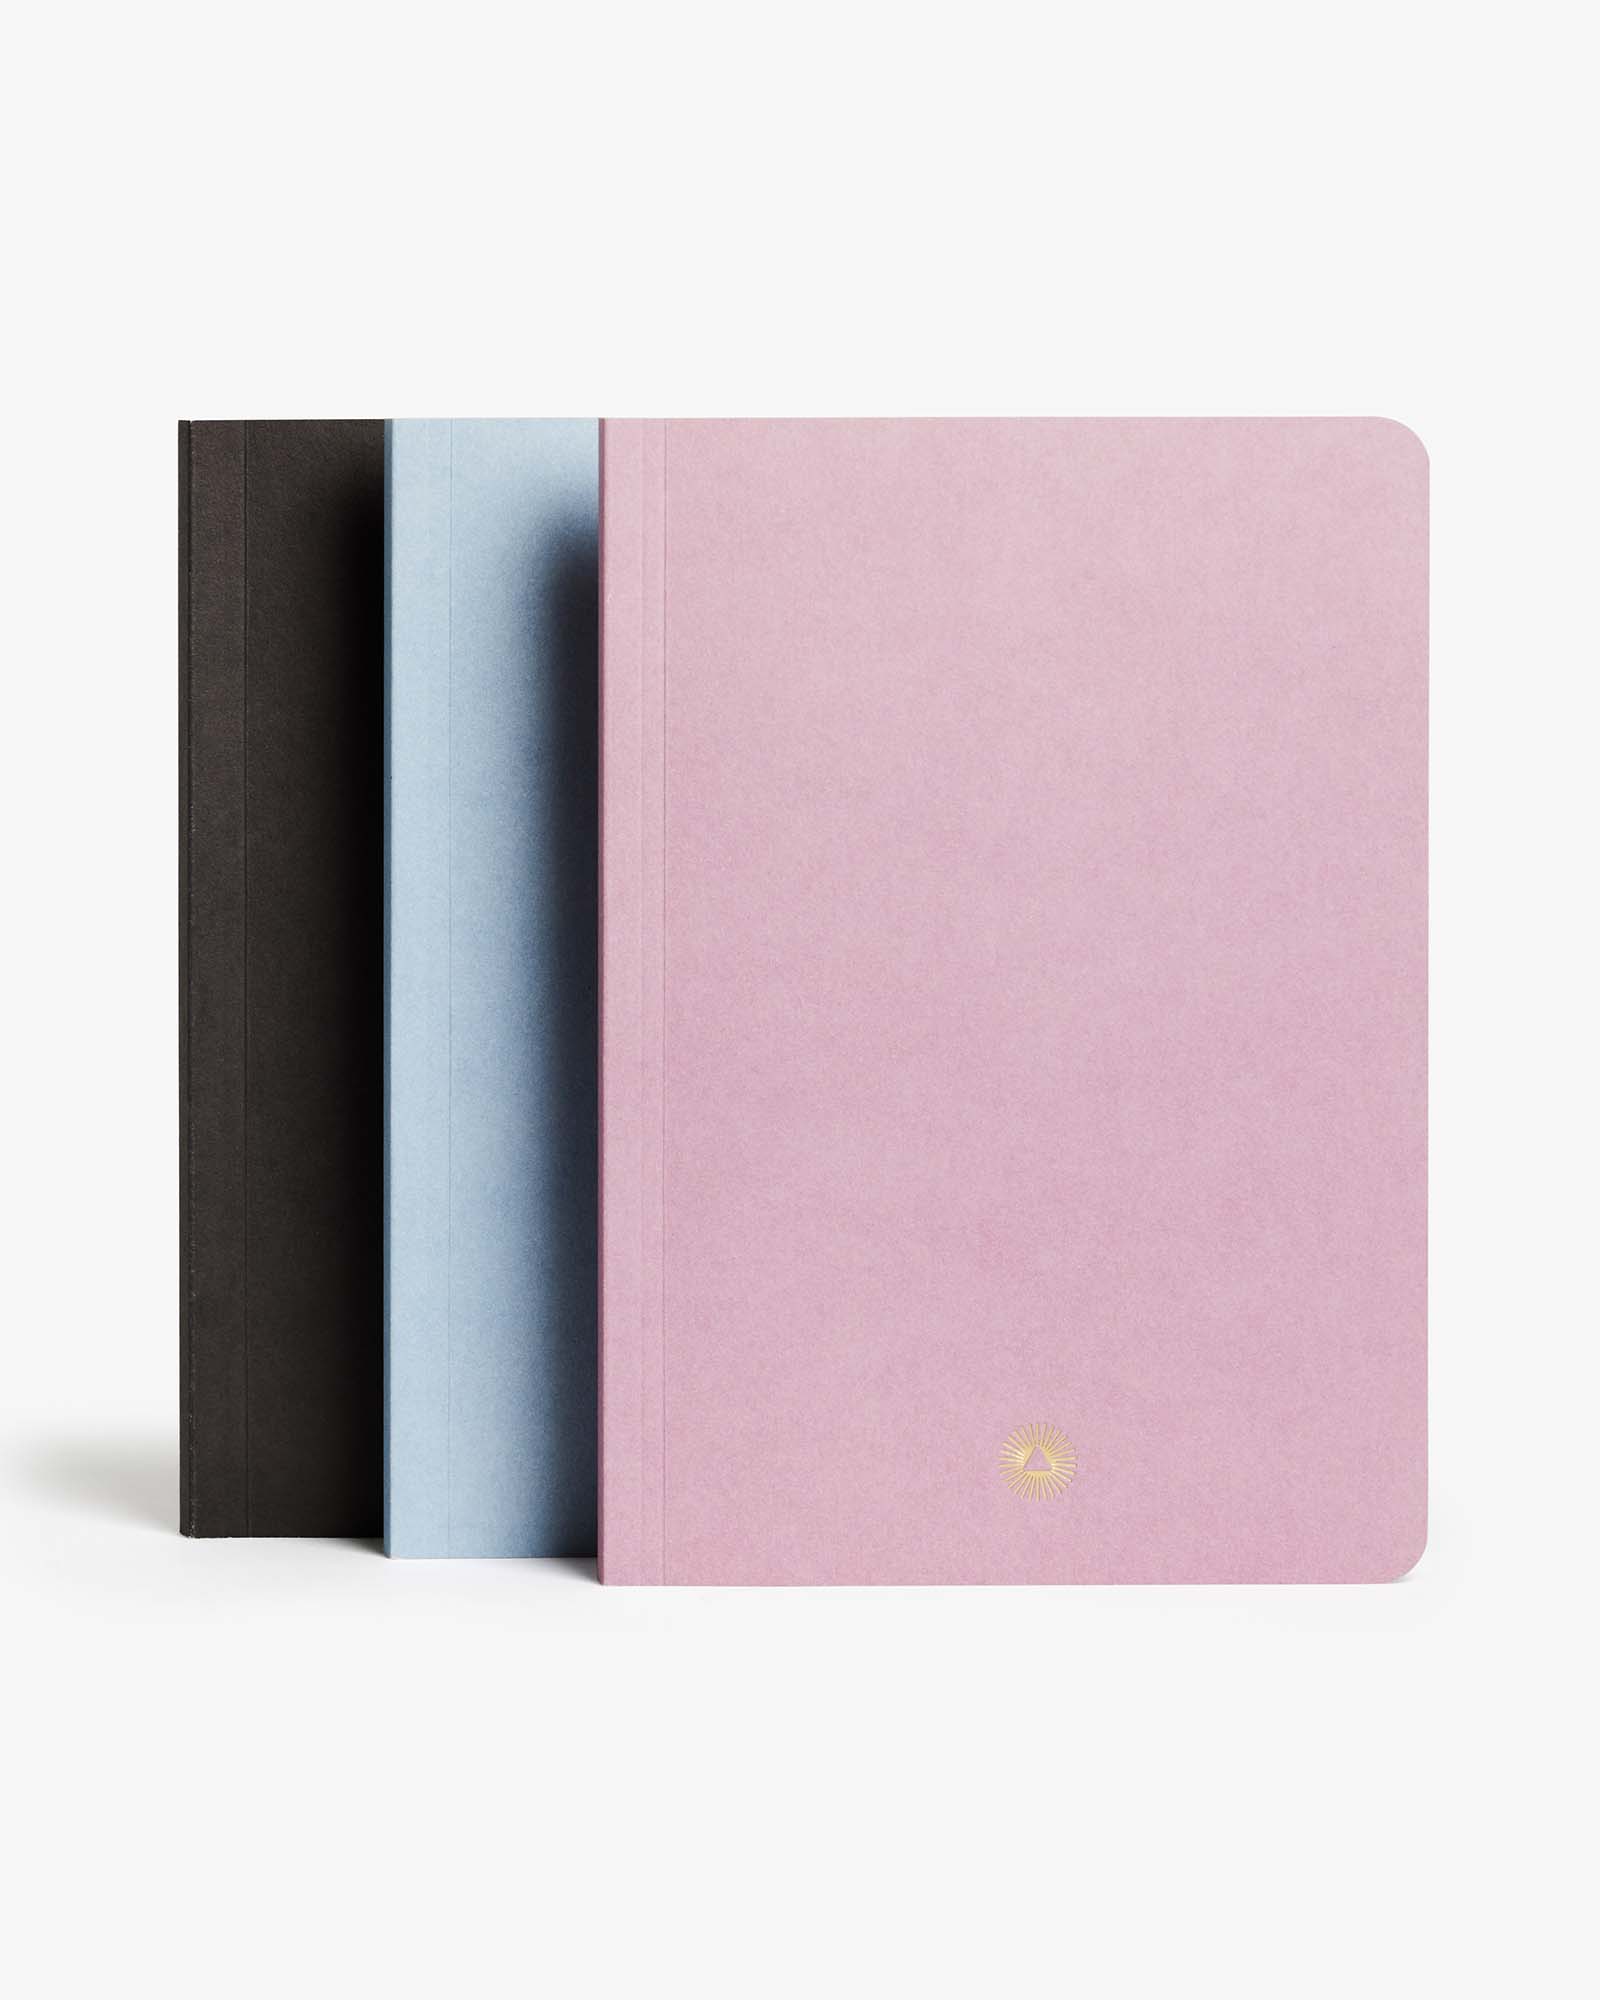  Essential Notebook - Blue by Intelligent Change Intelligent Change Perfumarie